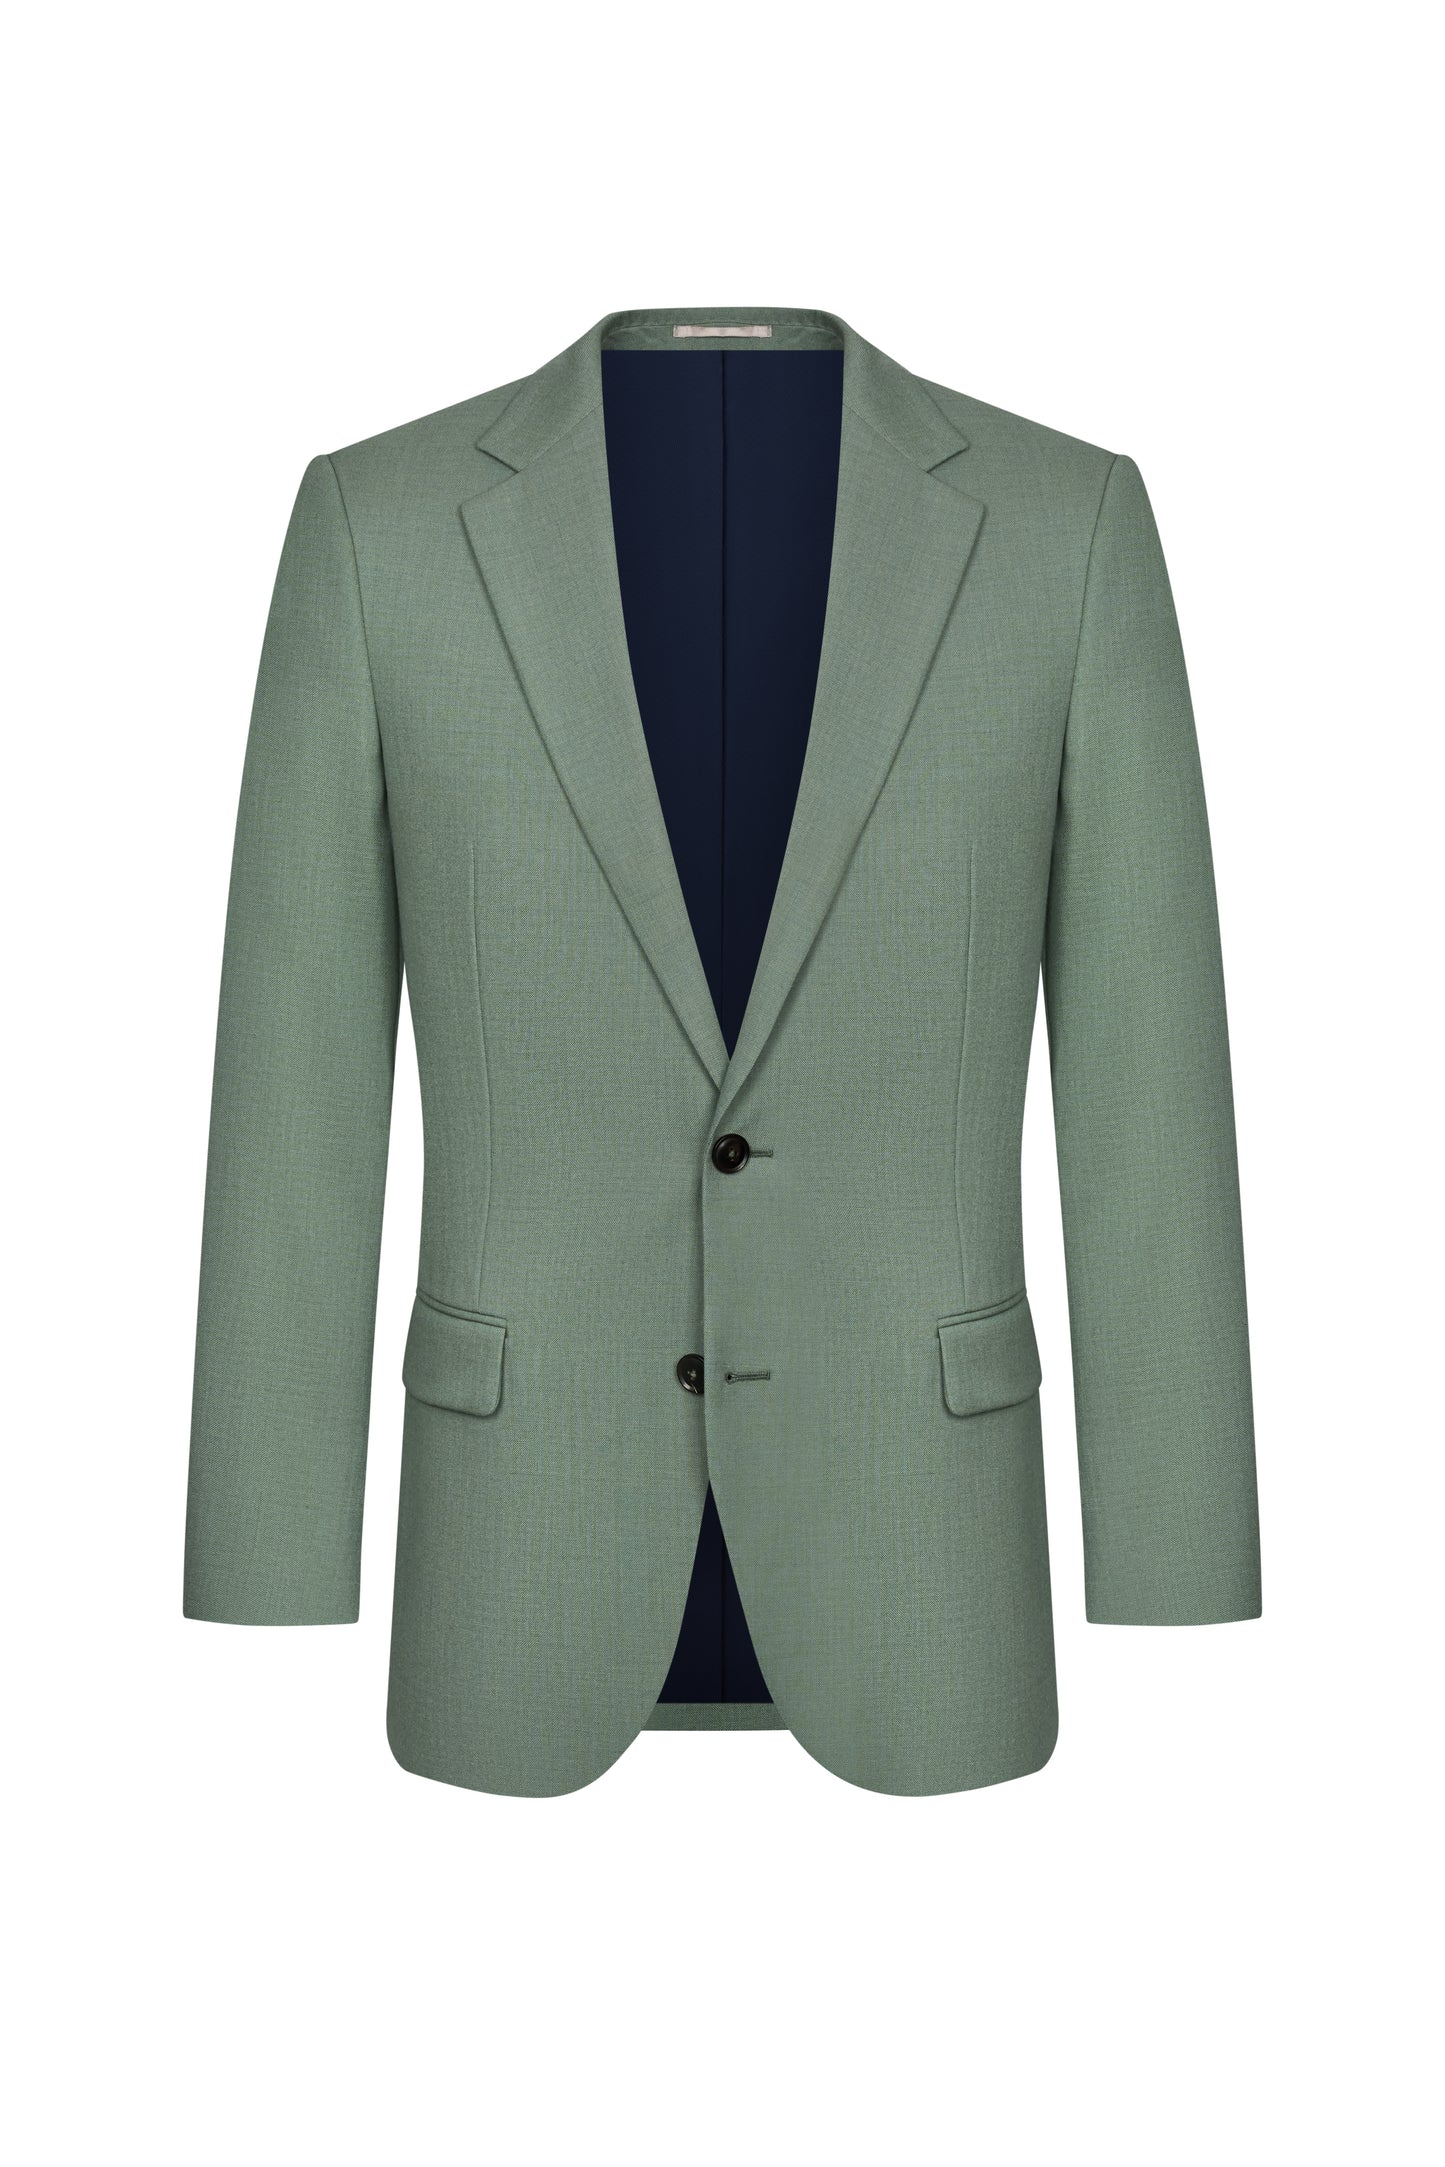 Holland & Sherry Sage Green Hopsack Custom Suit